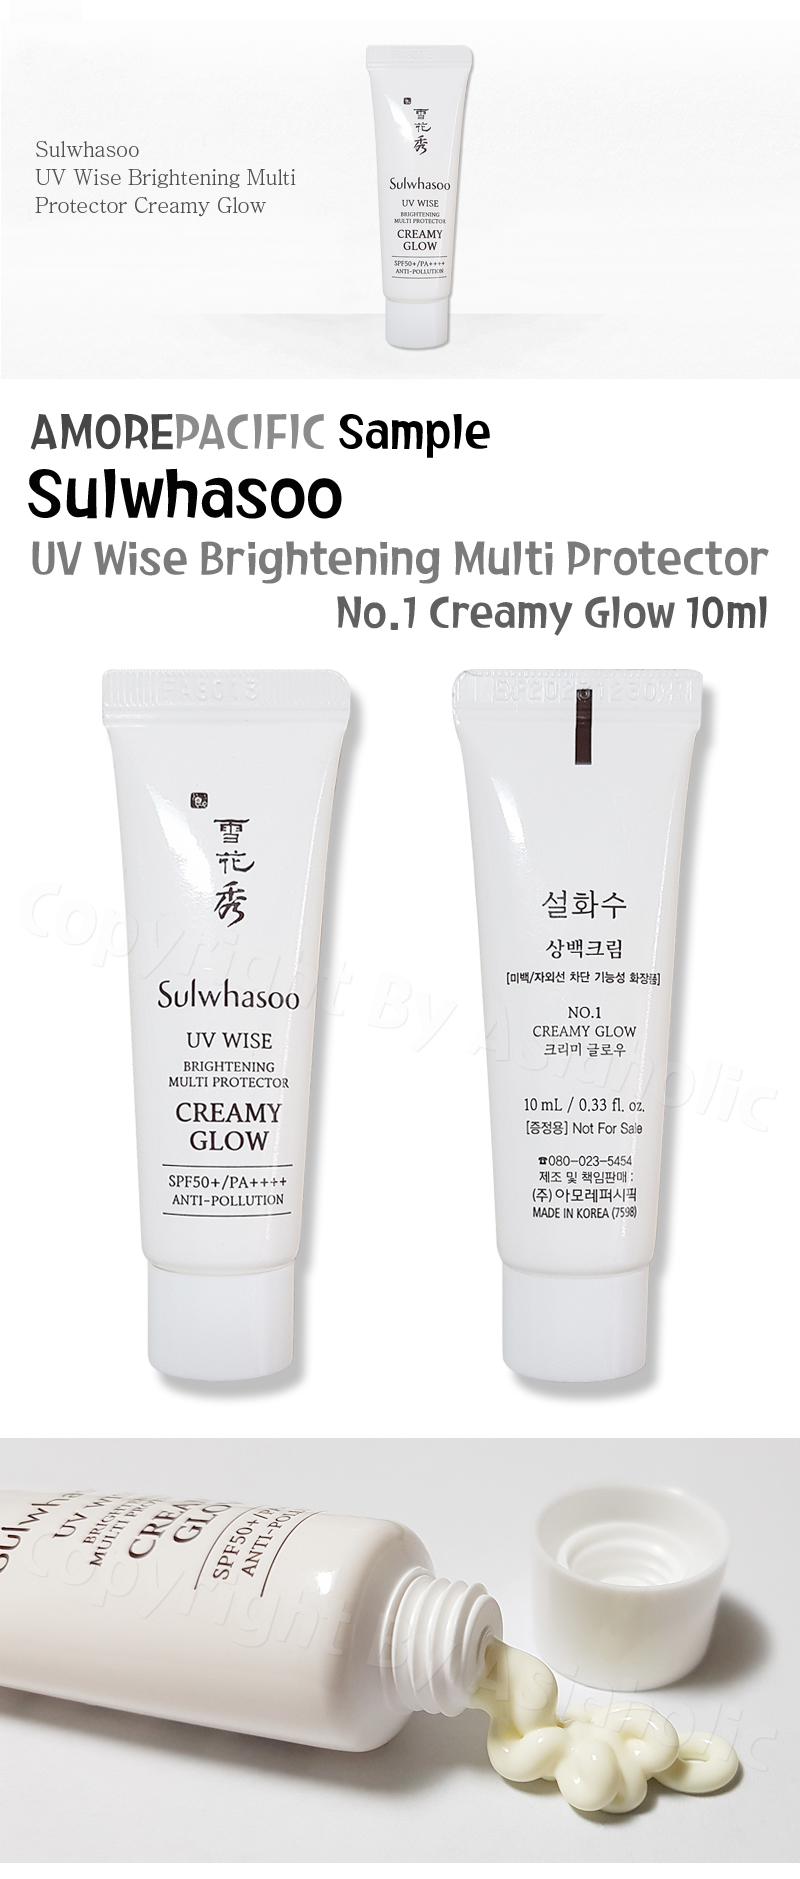 Sulwhasoo UV Wise Brightening Multi Protector No.1 Creamy Glow 10ml x 1pcs Sample Newest Version